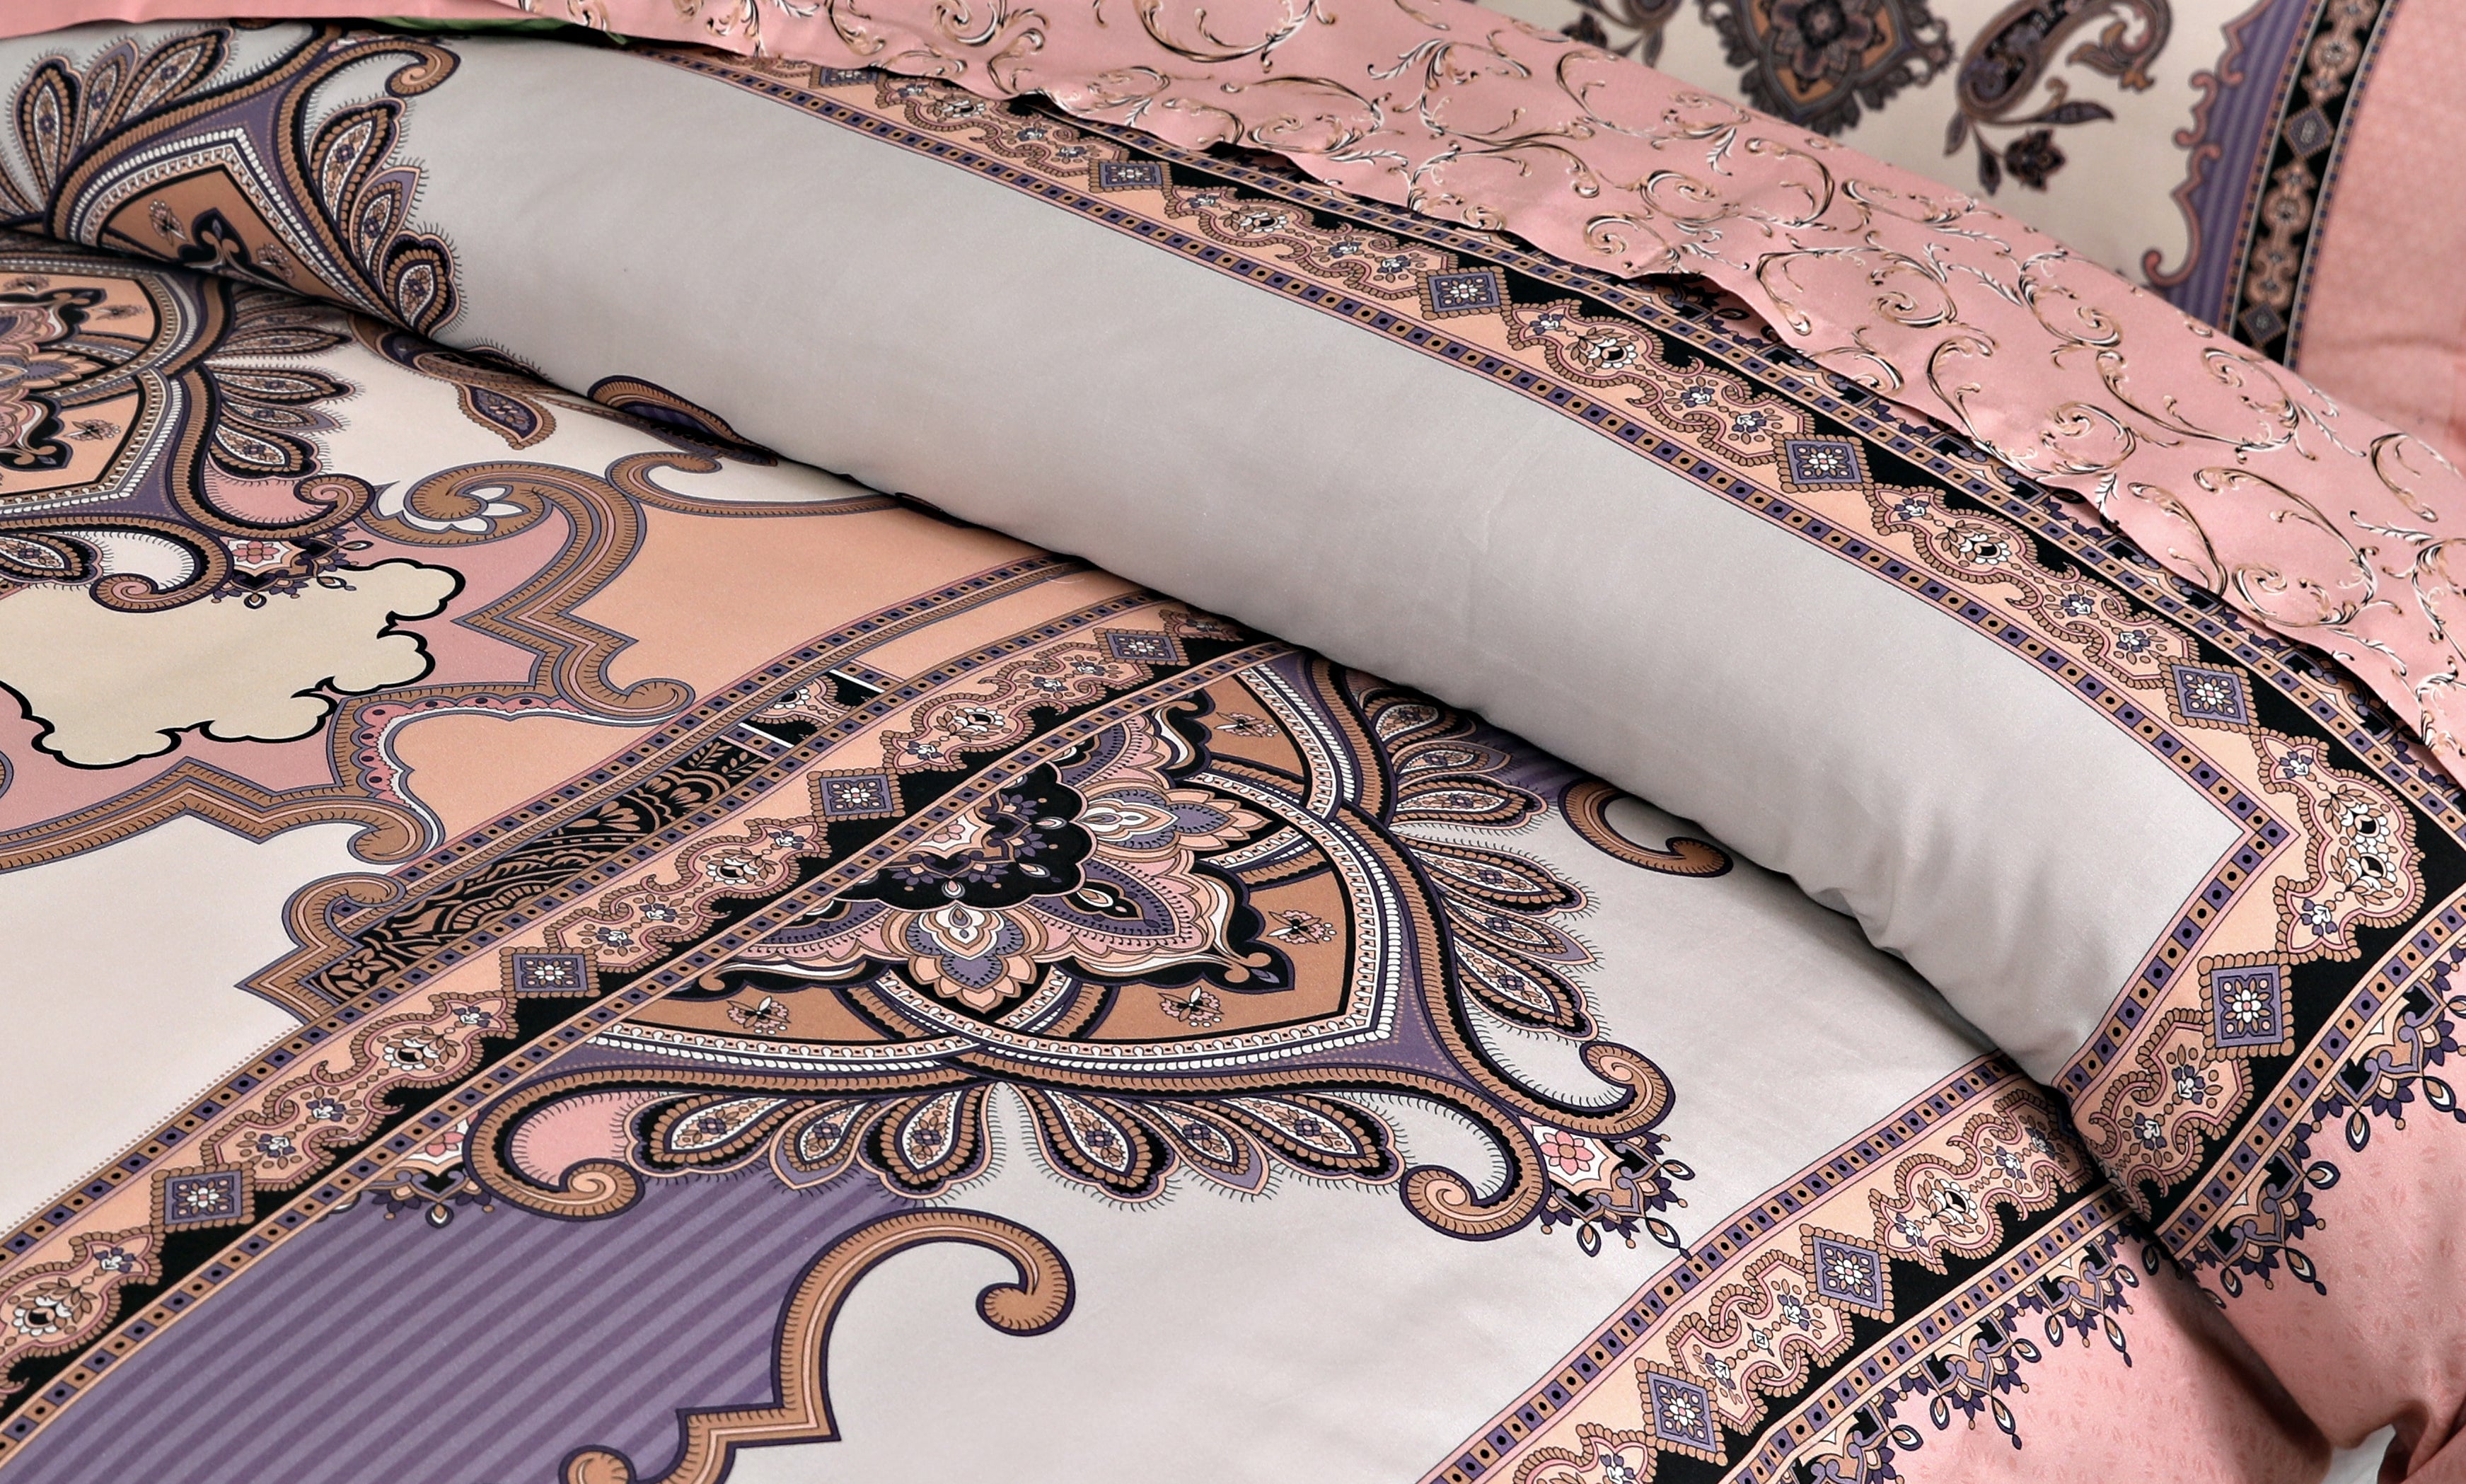 Sitara Imperial Comforter Set (Filled) 22